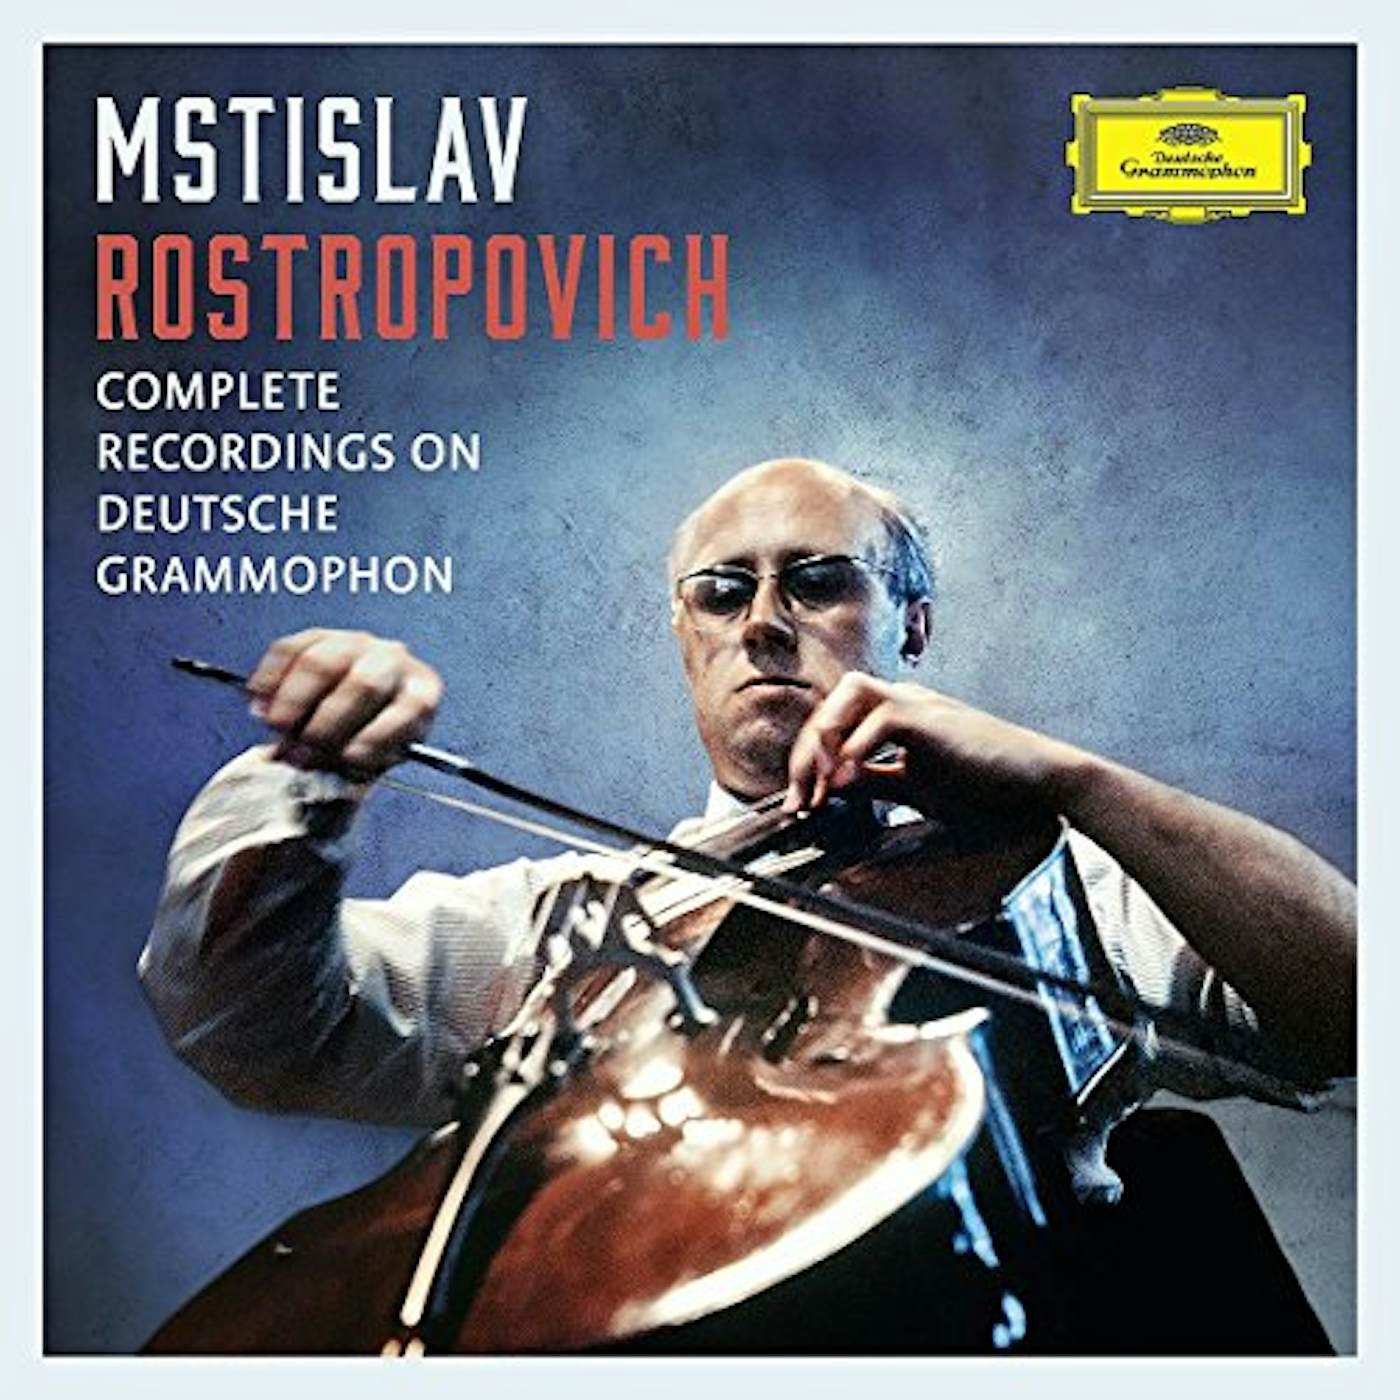 Mstislav Rostropovich COMPLETE RECORDINGS ON DEUTSCHE GRAMMOPHON CD